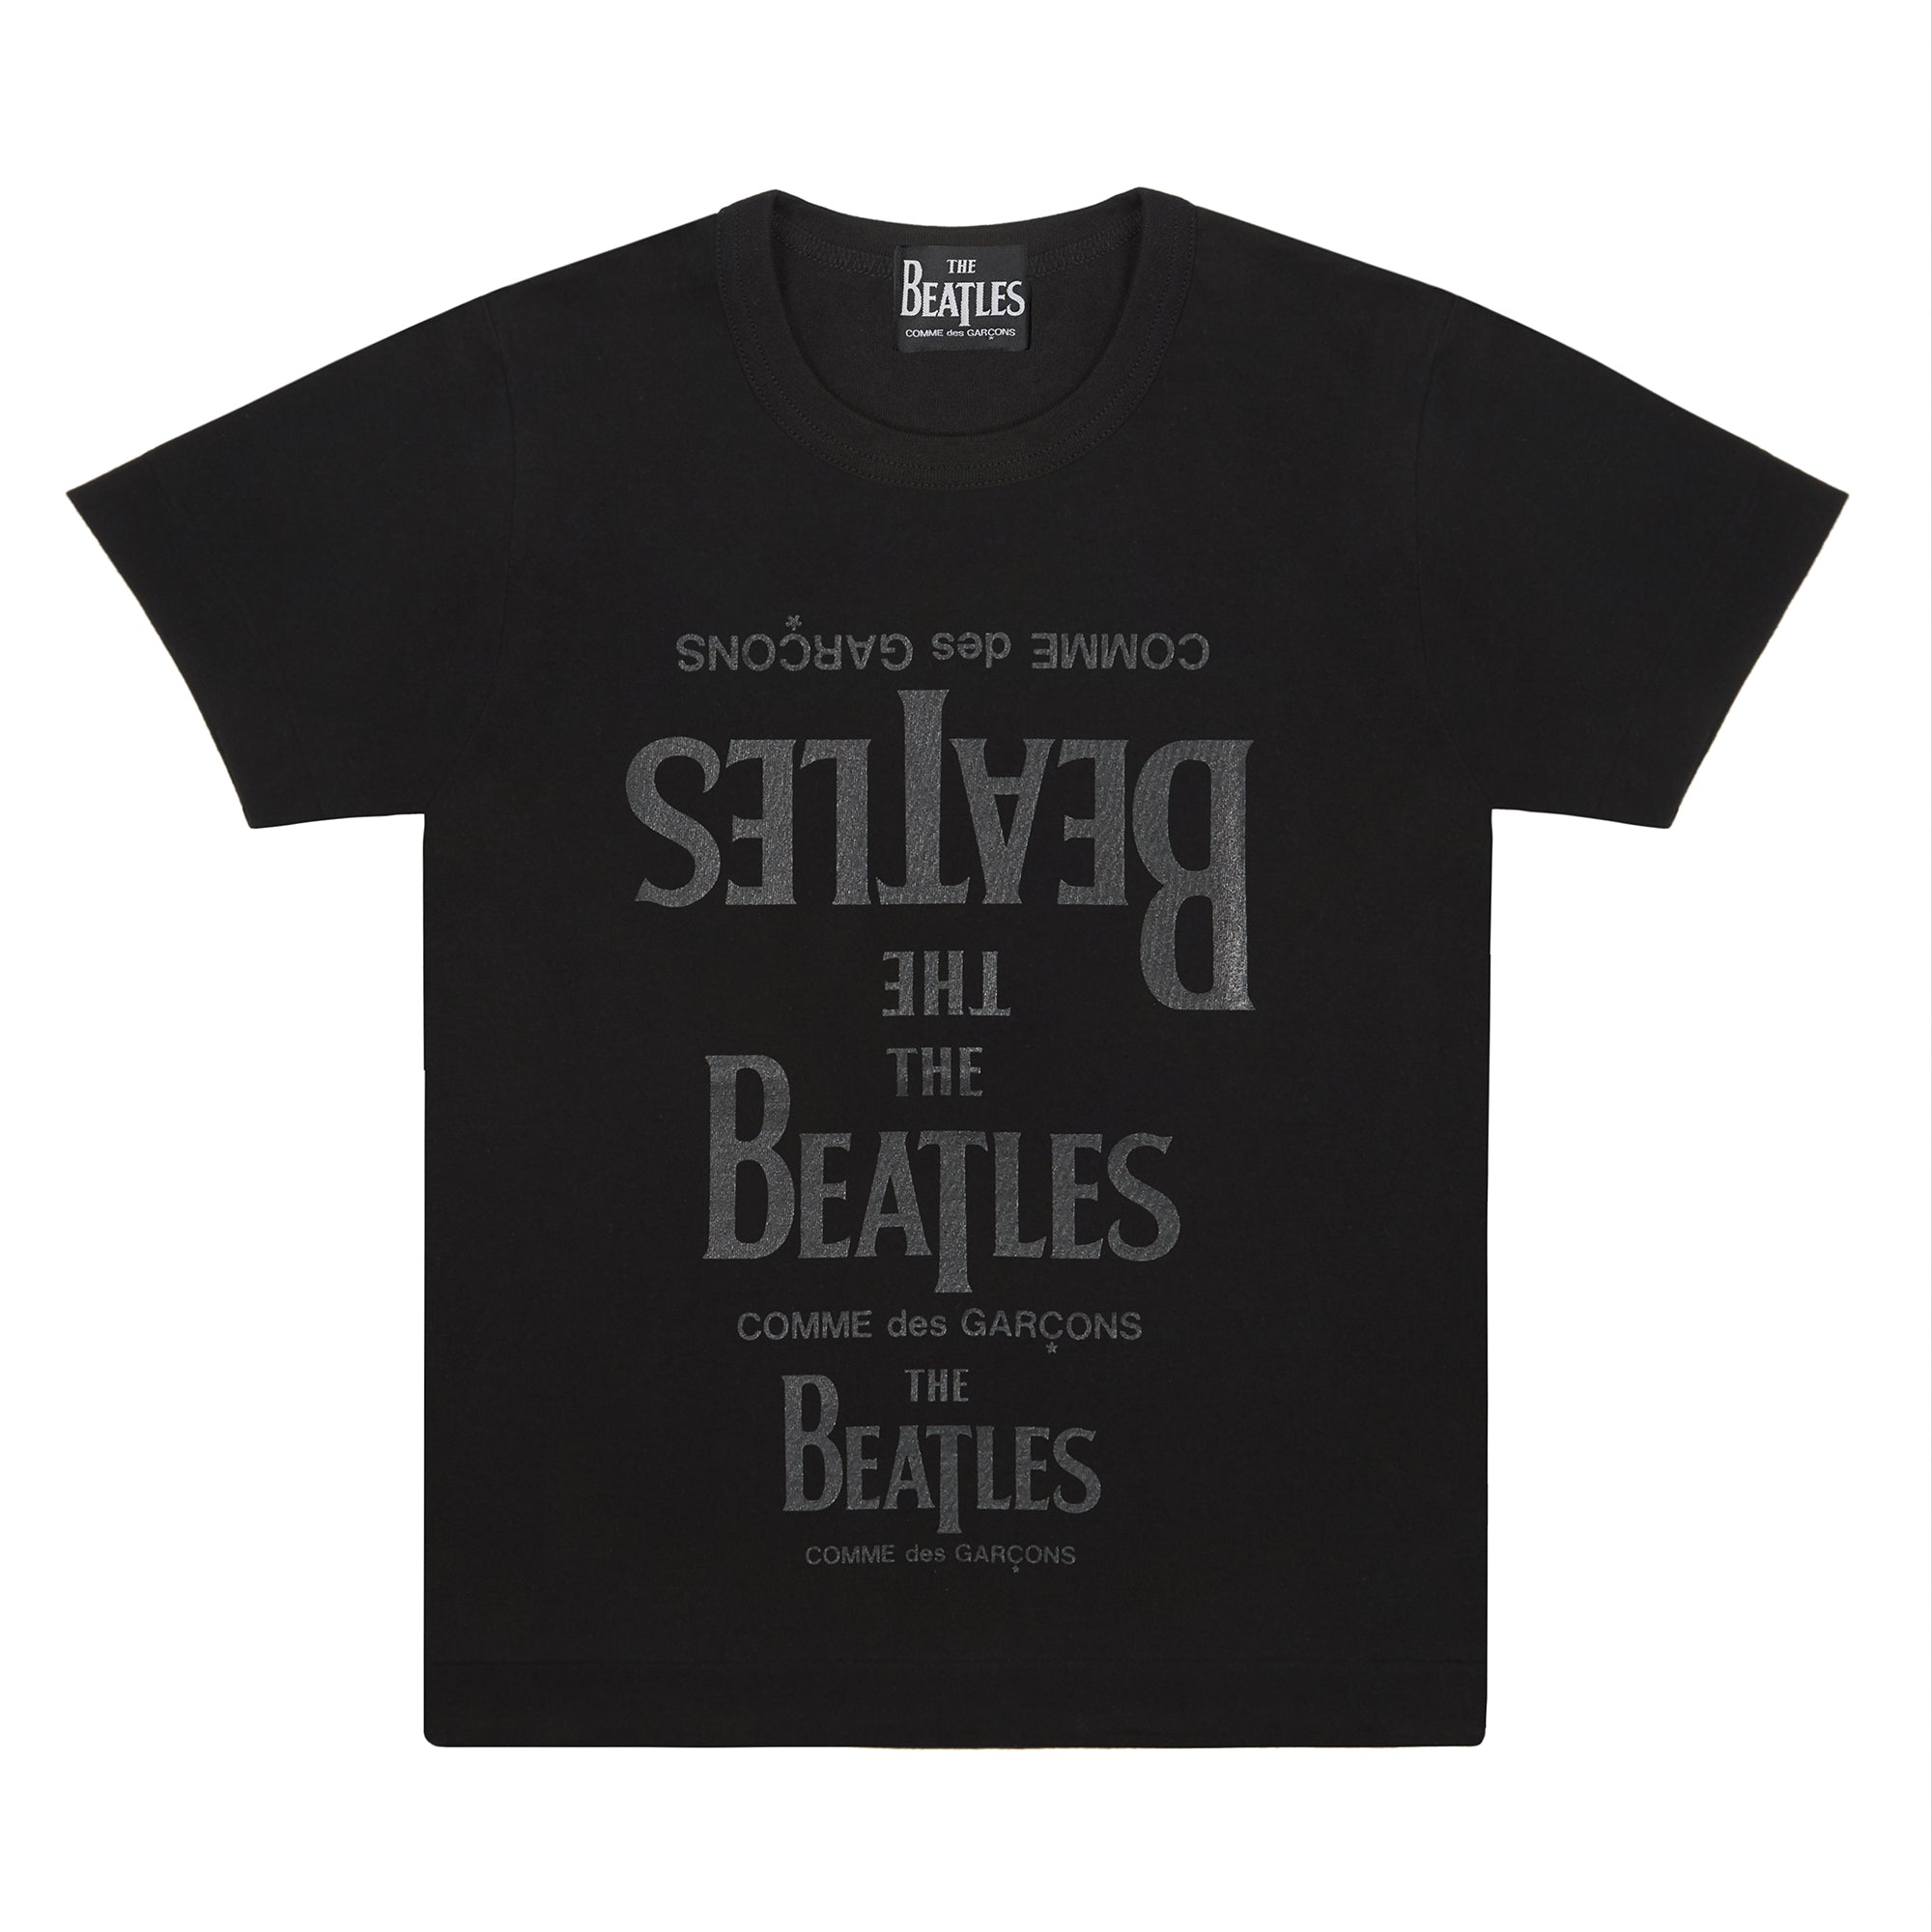 The Beatles CDG - Rubber Printed T-Shirt Black - (VT-T001-051 ...